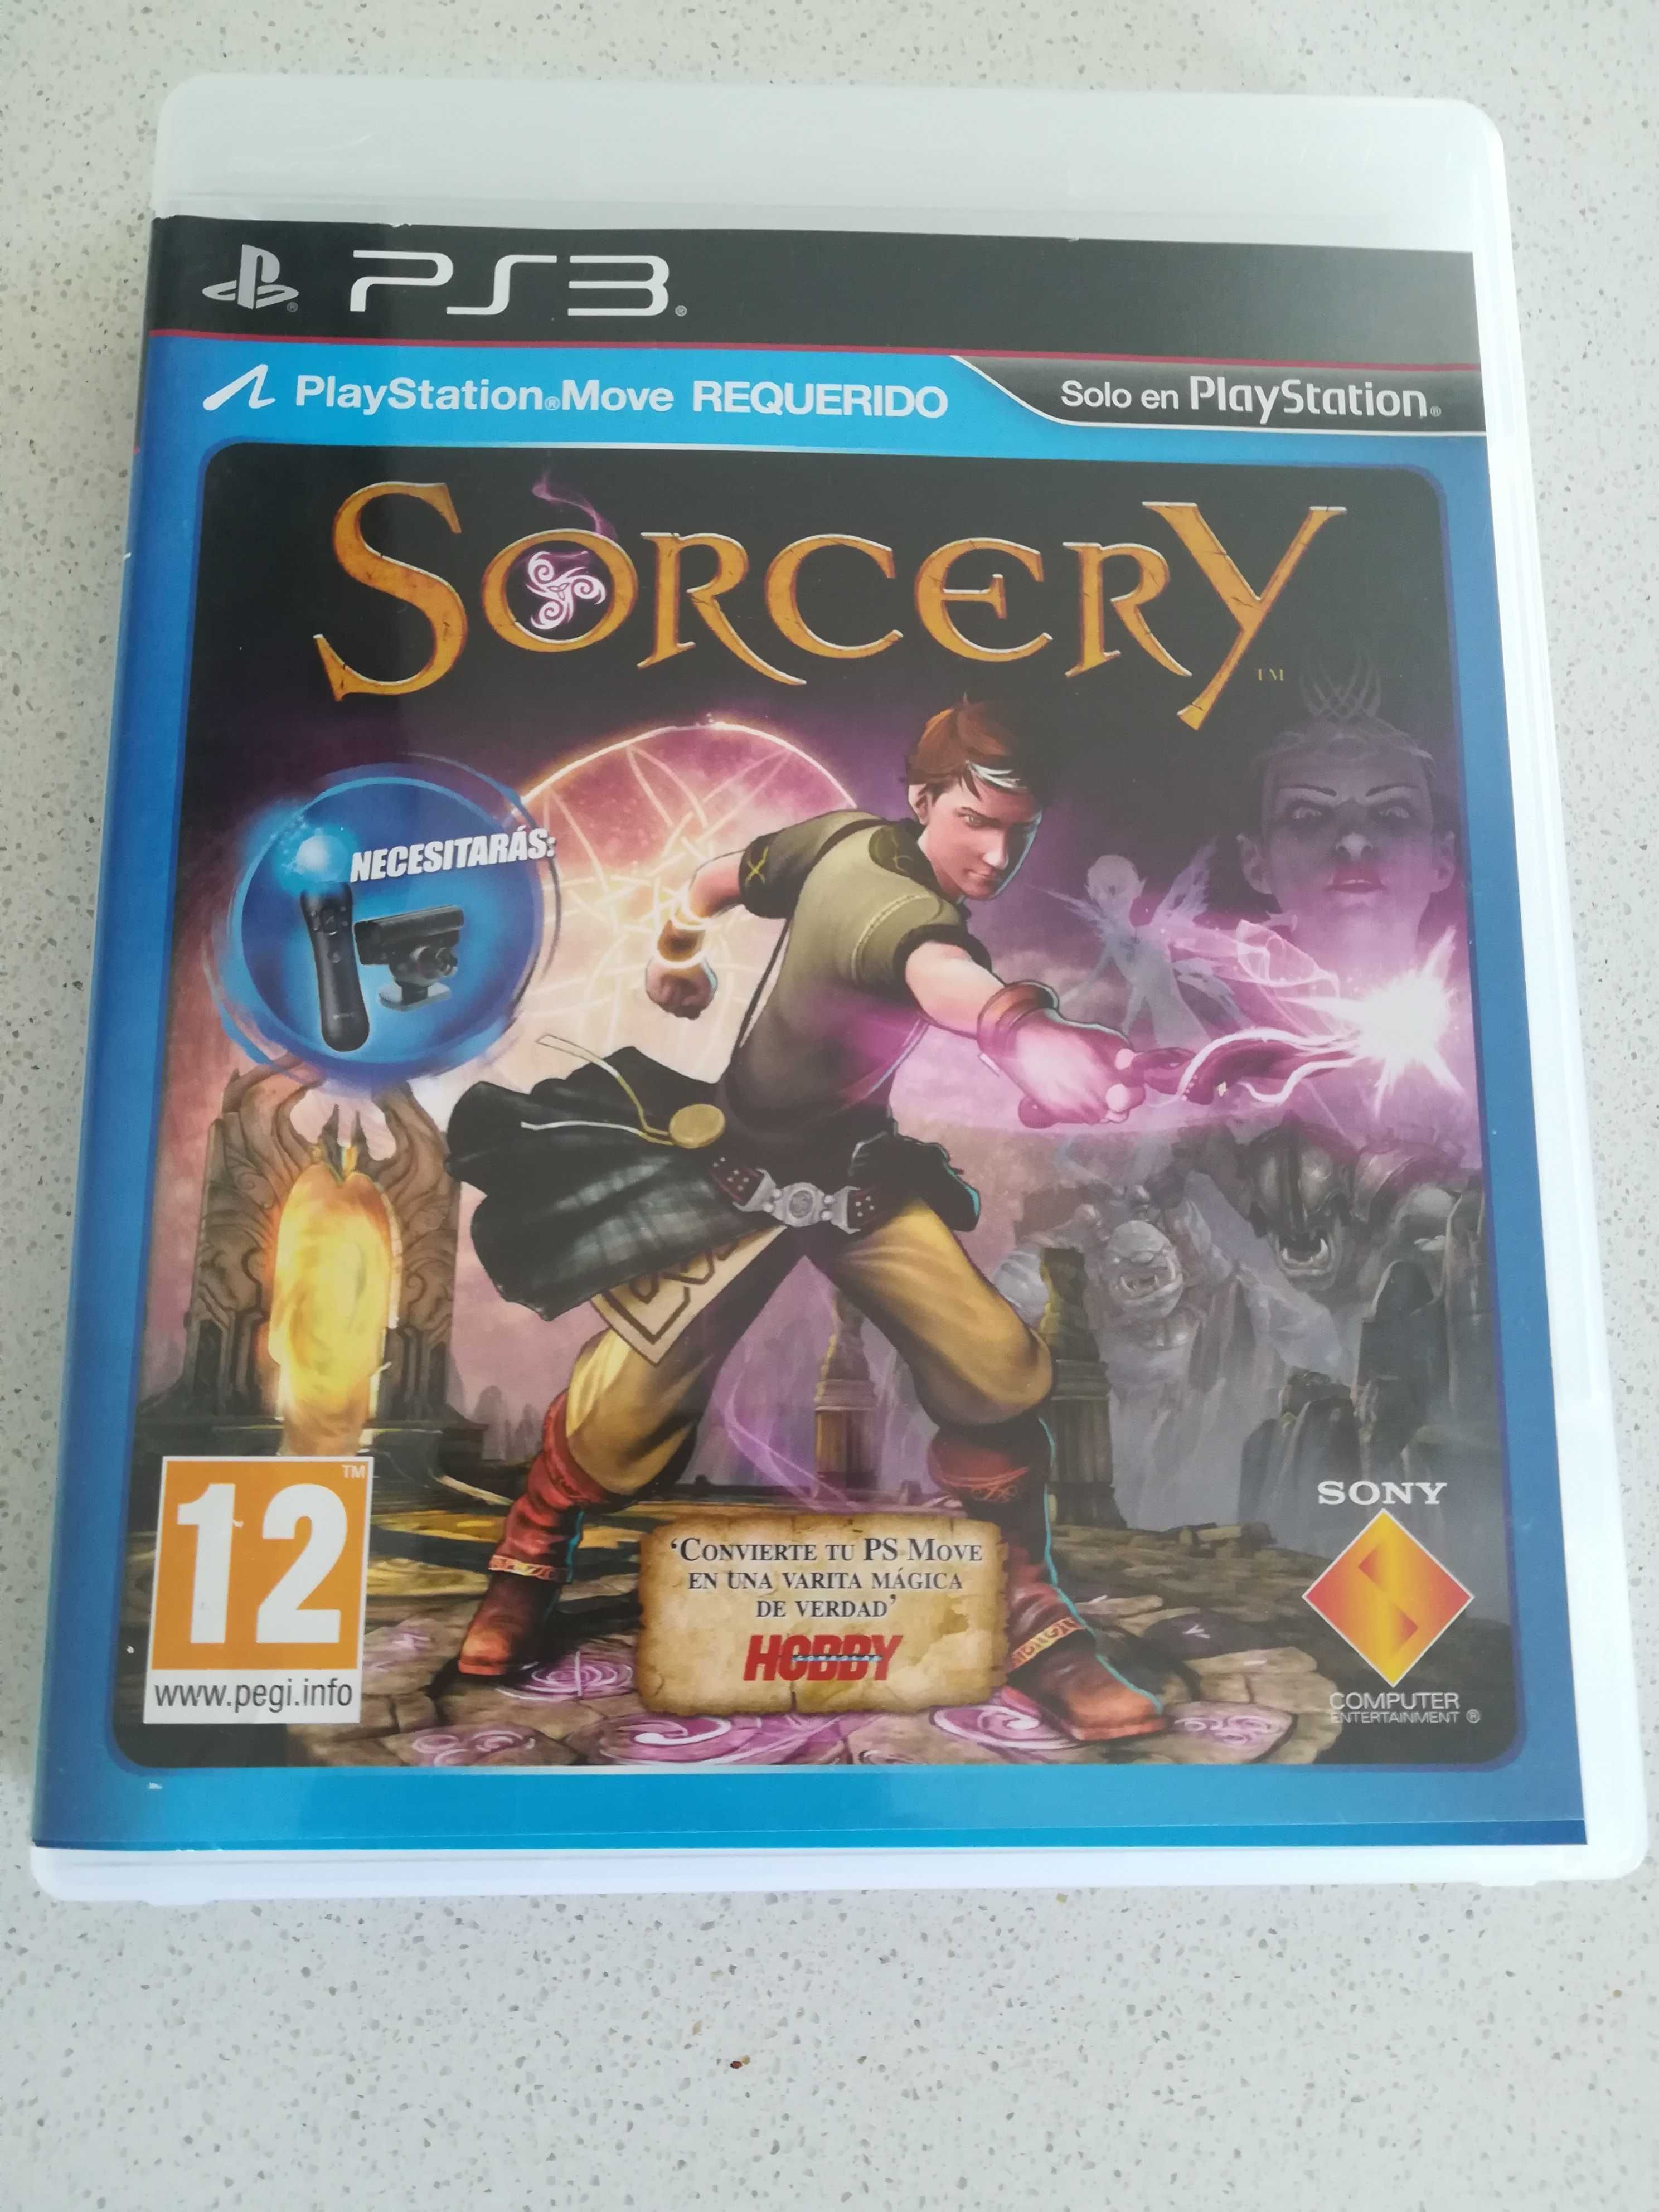 Jogo Sorcery - PS3